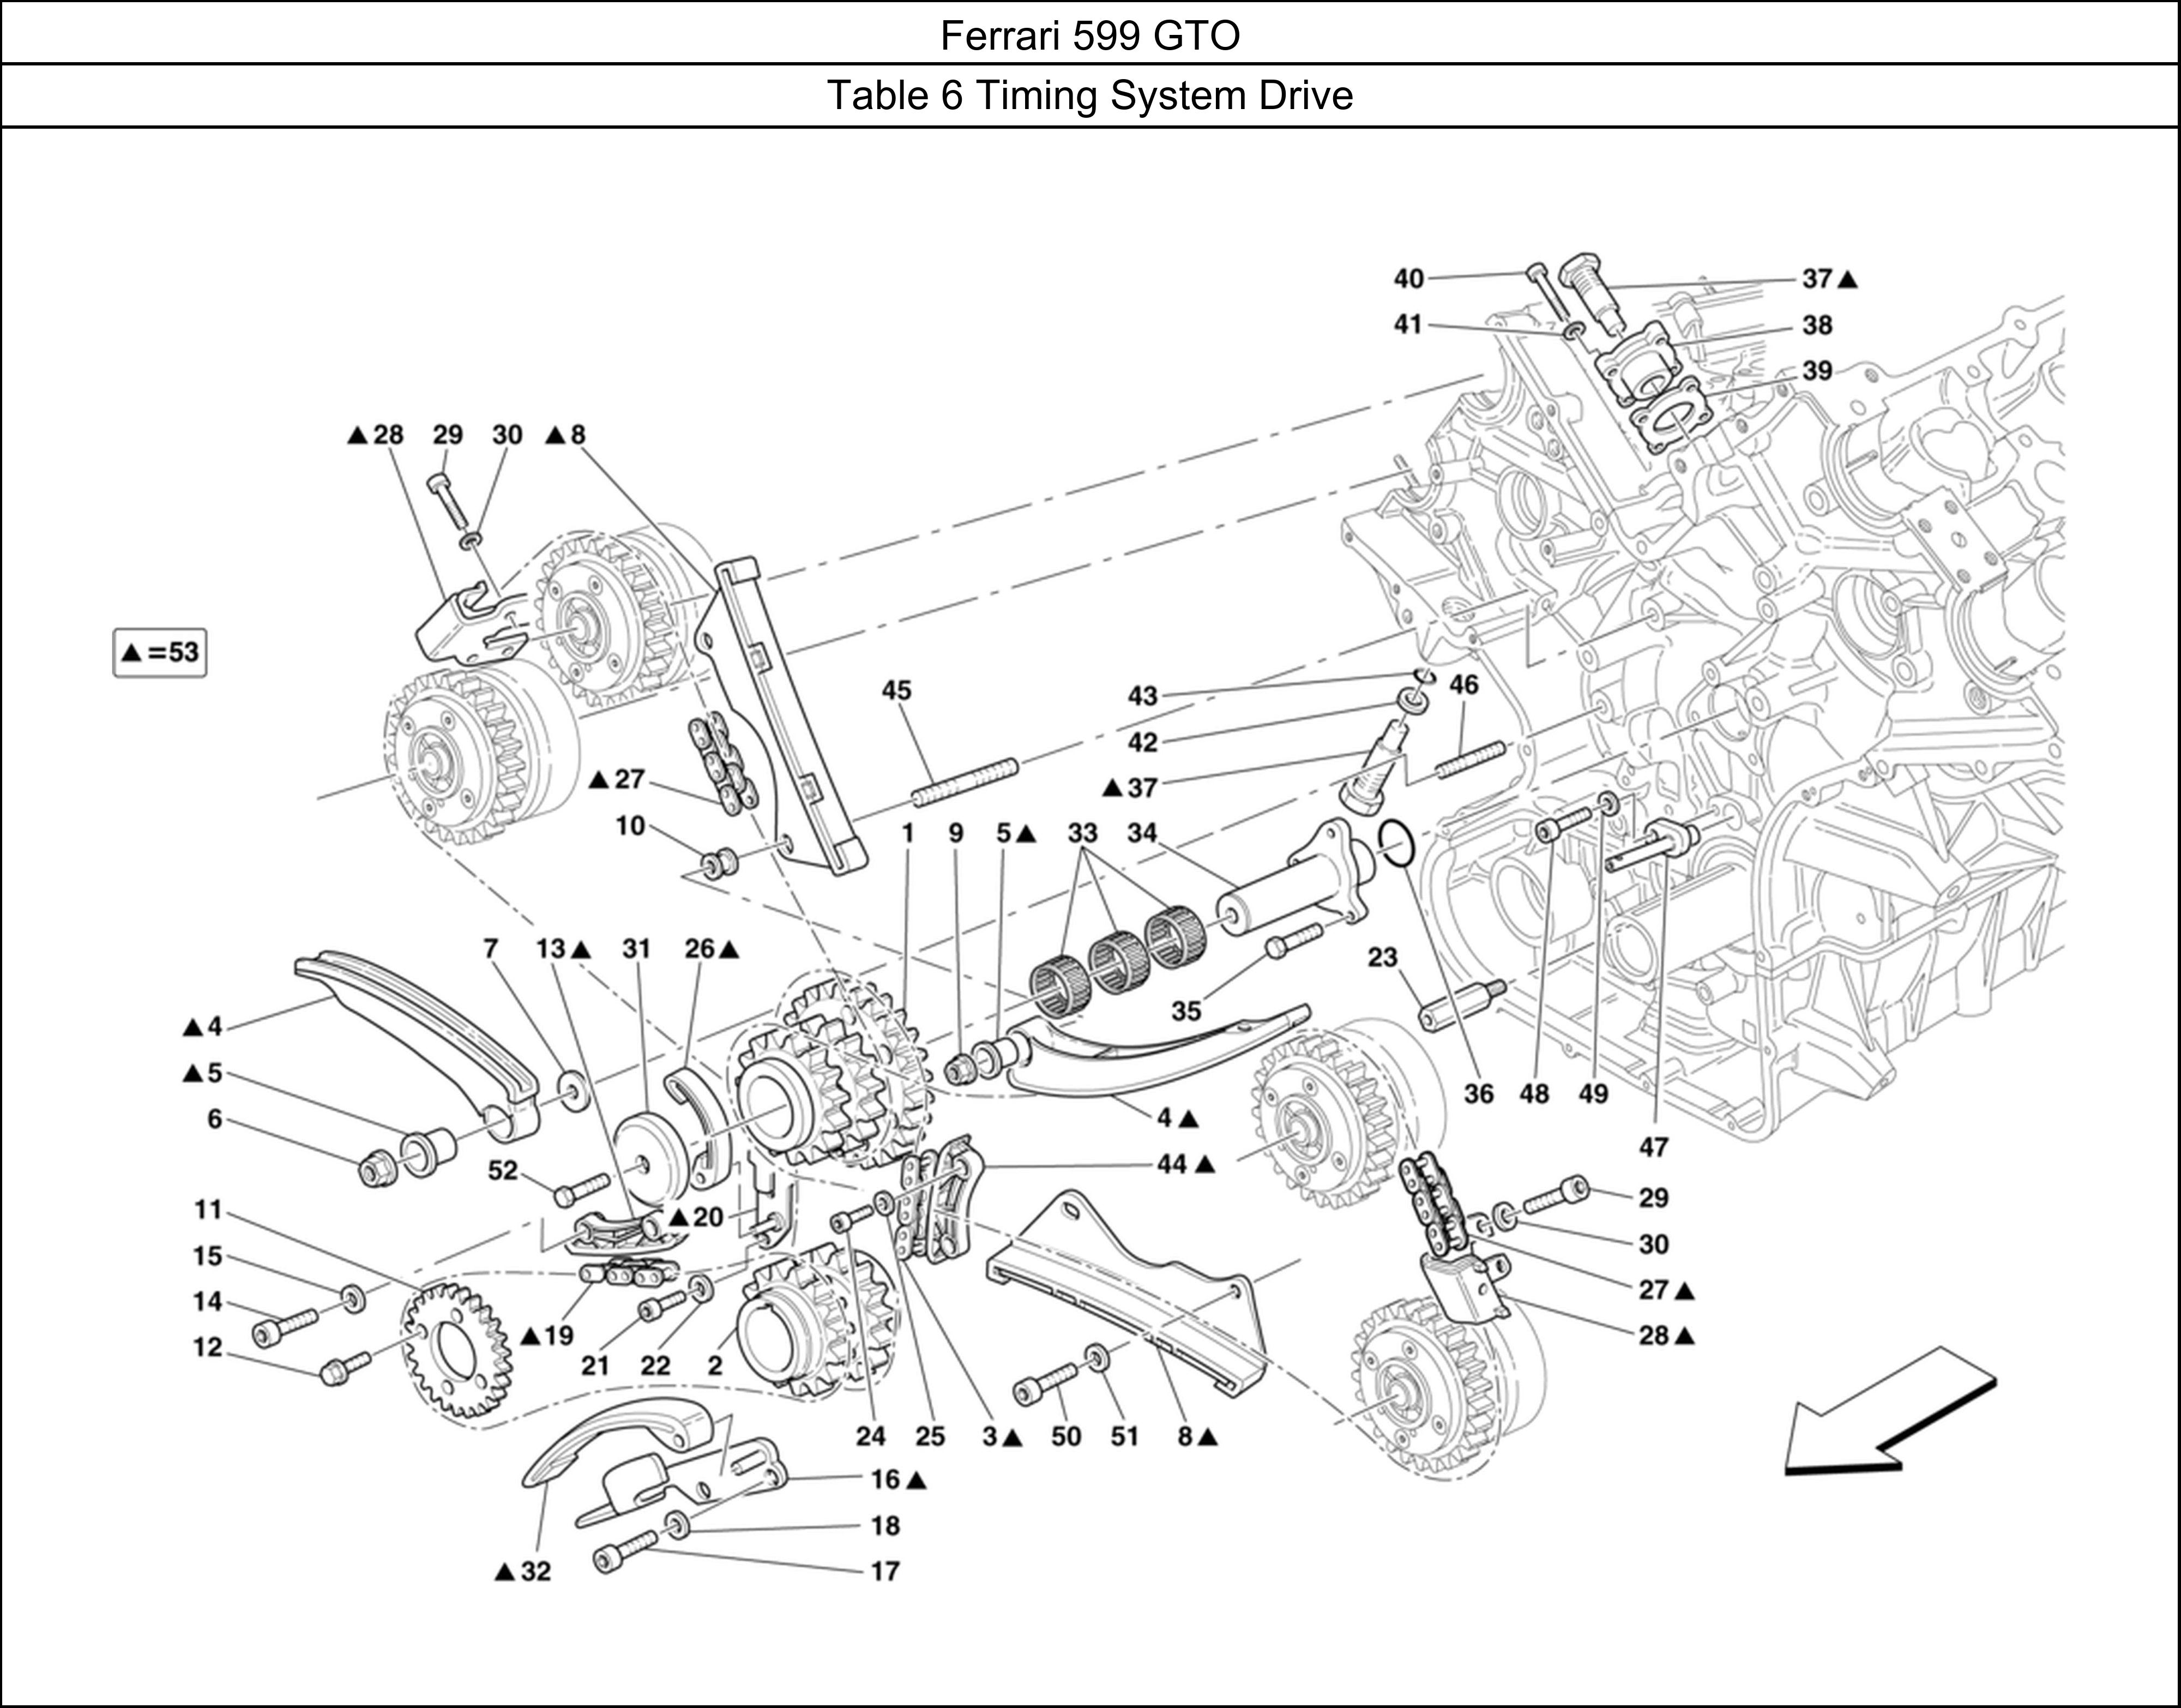 Ferrari Parts Ferrari 599 GTO Table 6 Timing System Drive